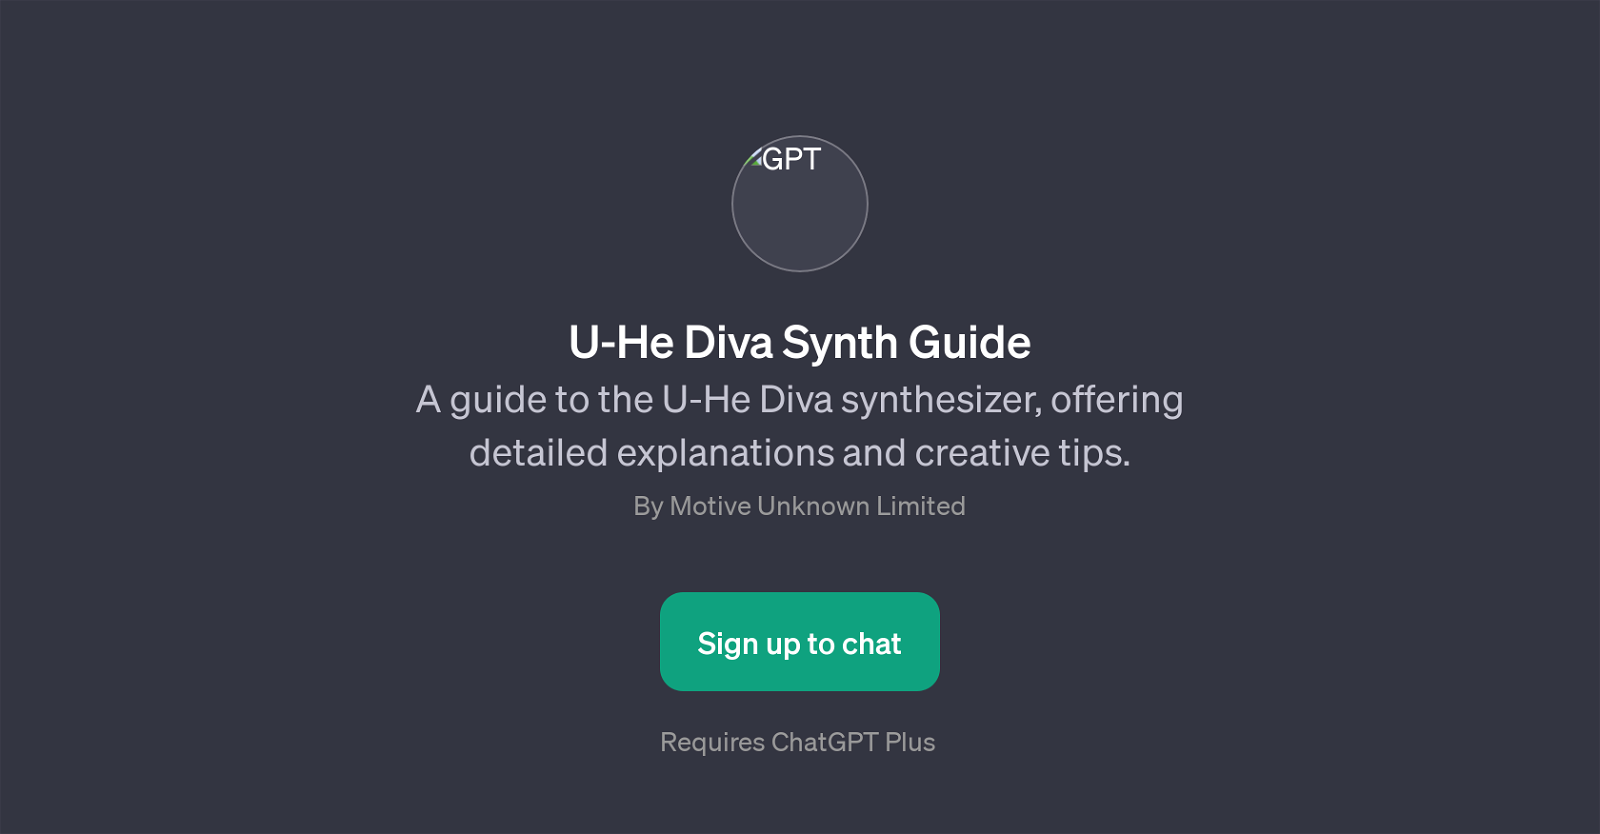 U-He Diva Synth Guide website